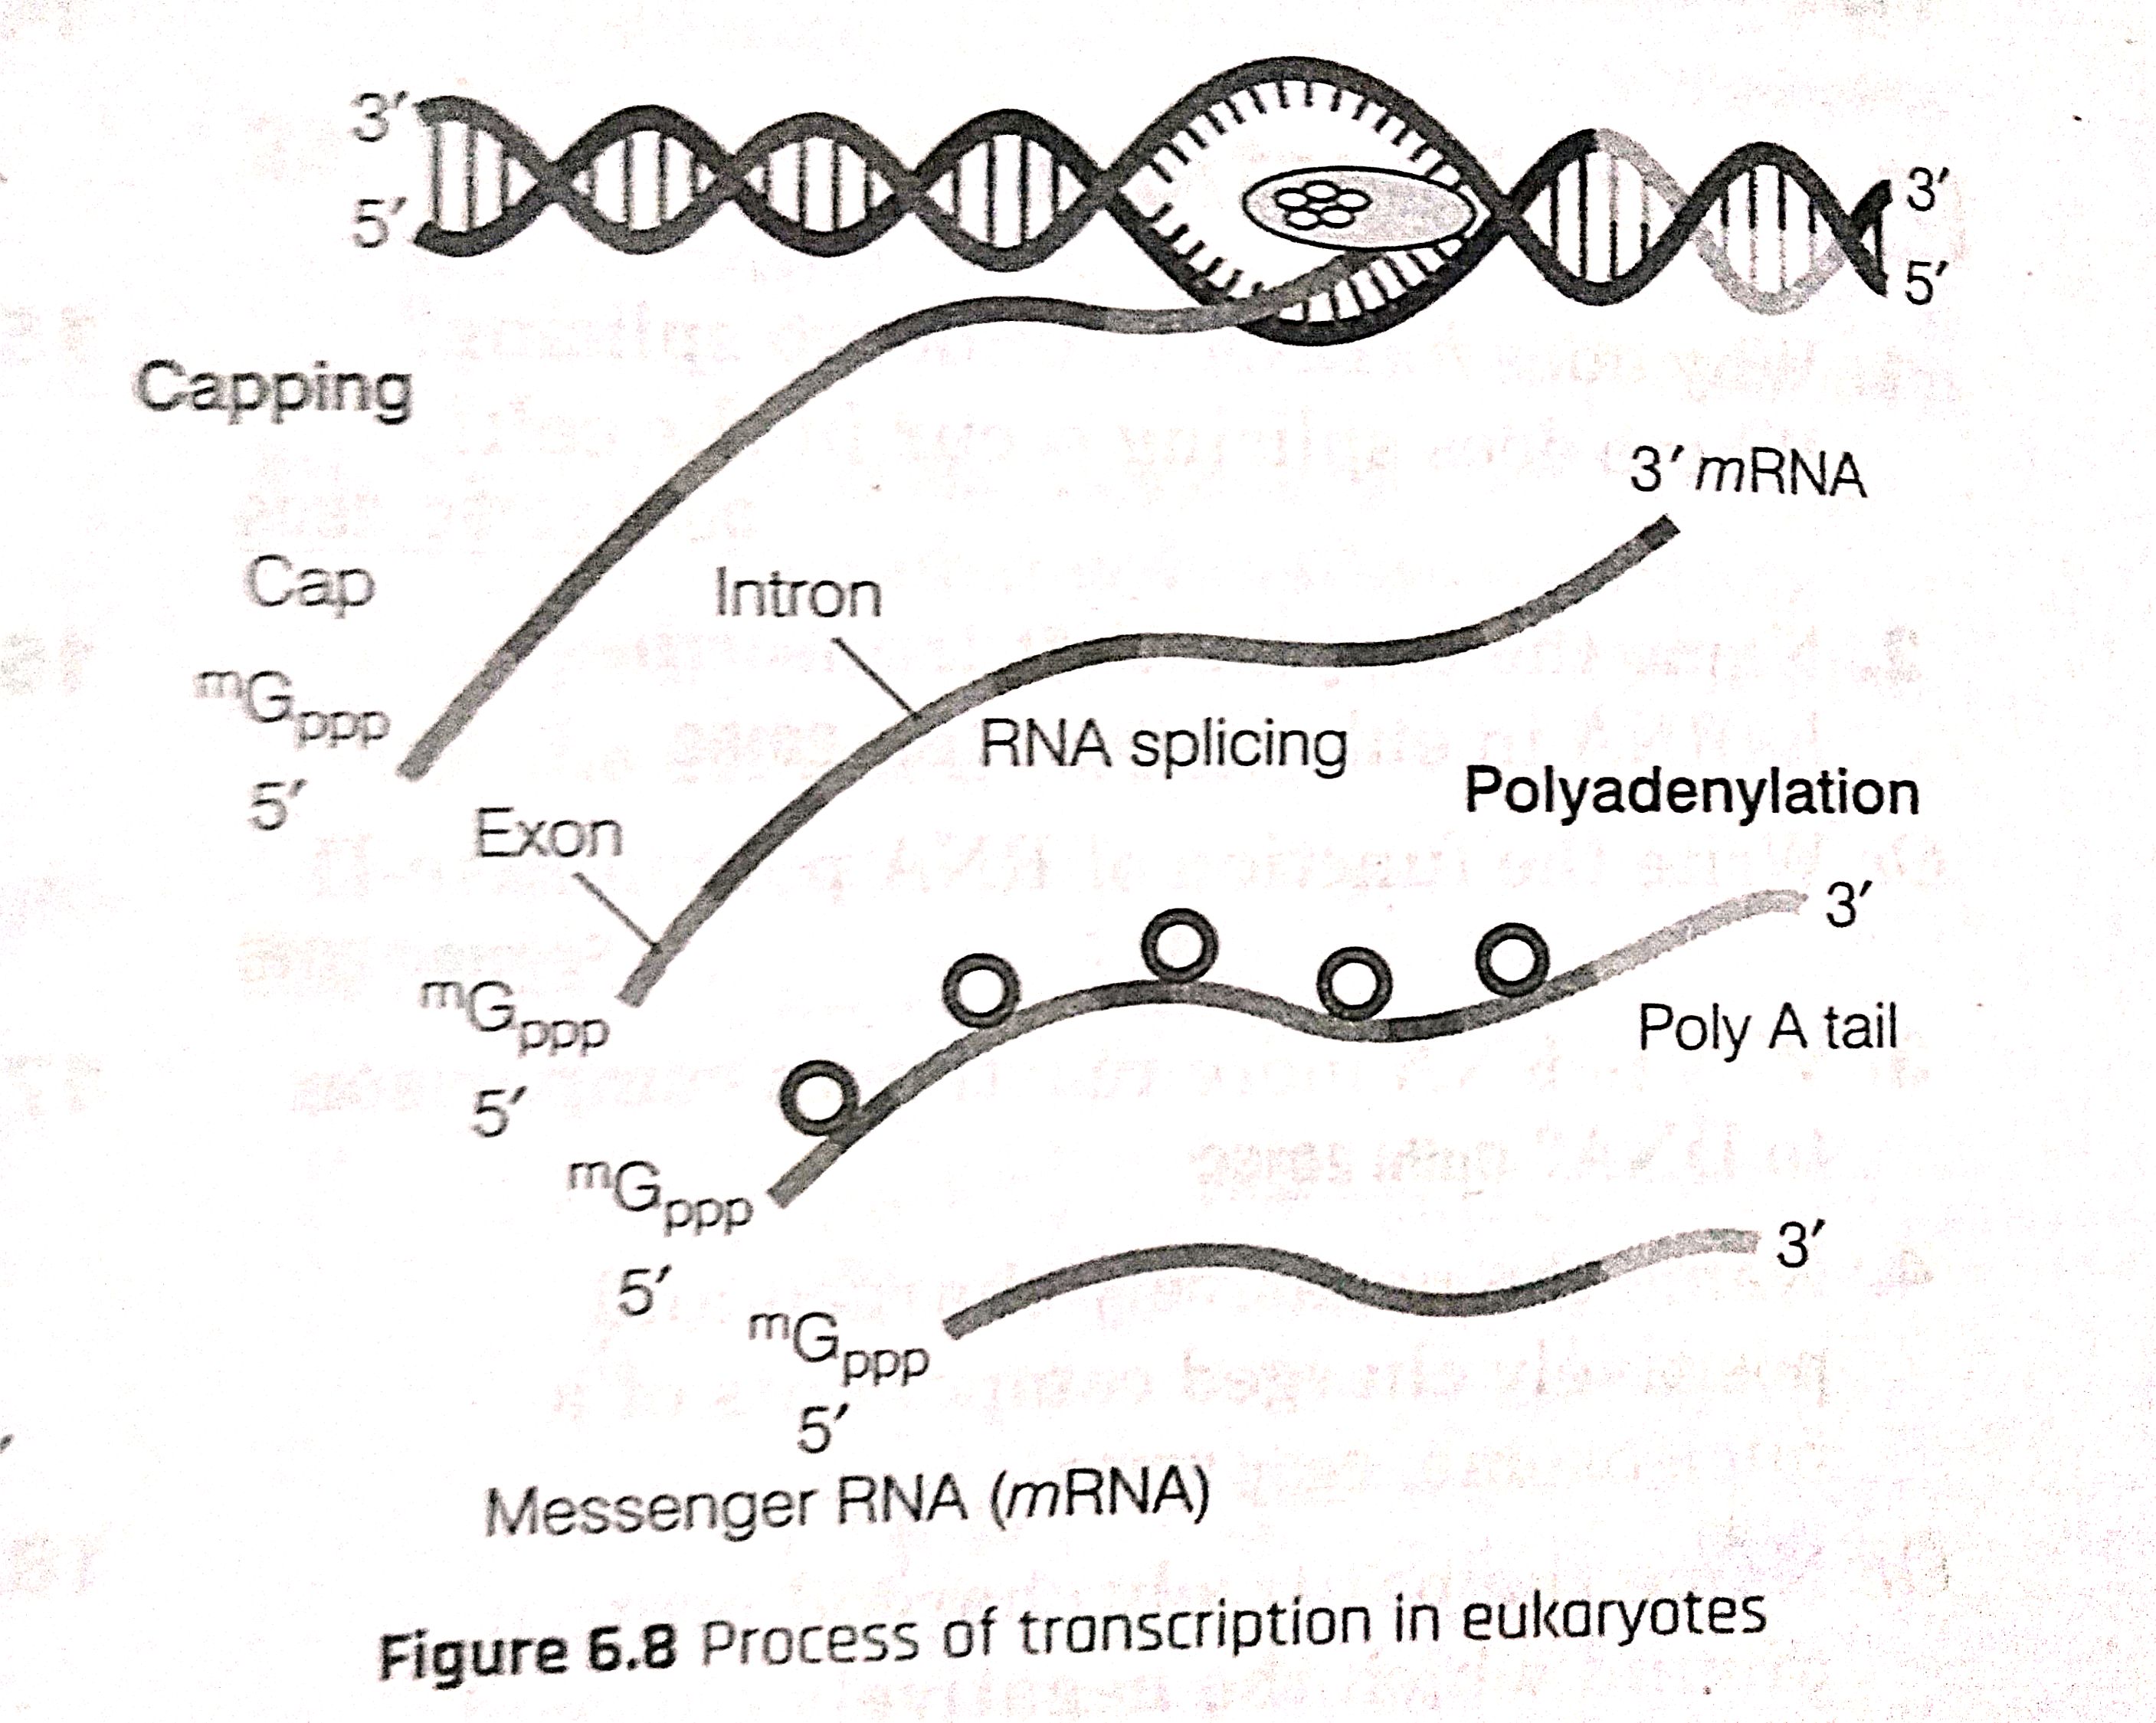 Diagrams from molecular basis of inheritance -New doc 18-Aug-2020 13.03-7.jpg